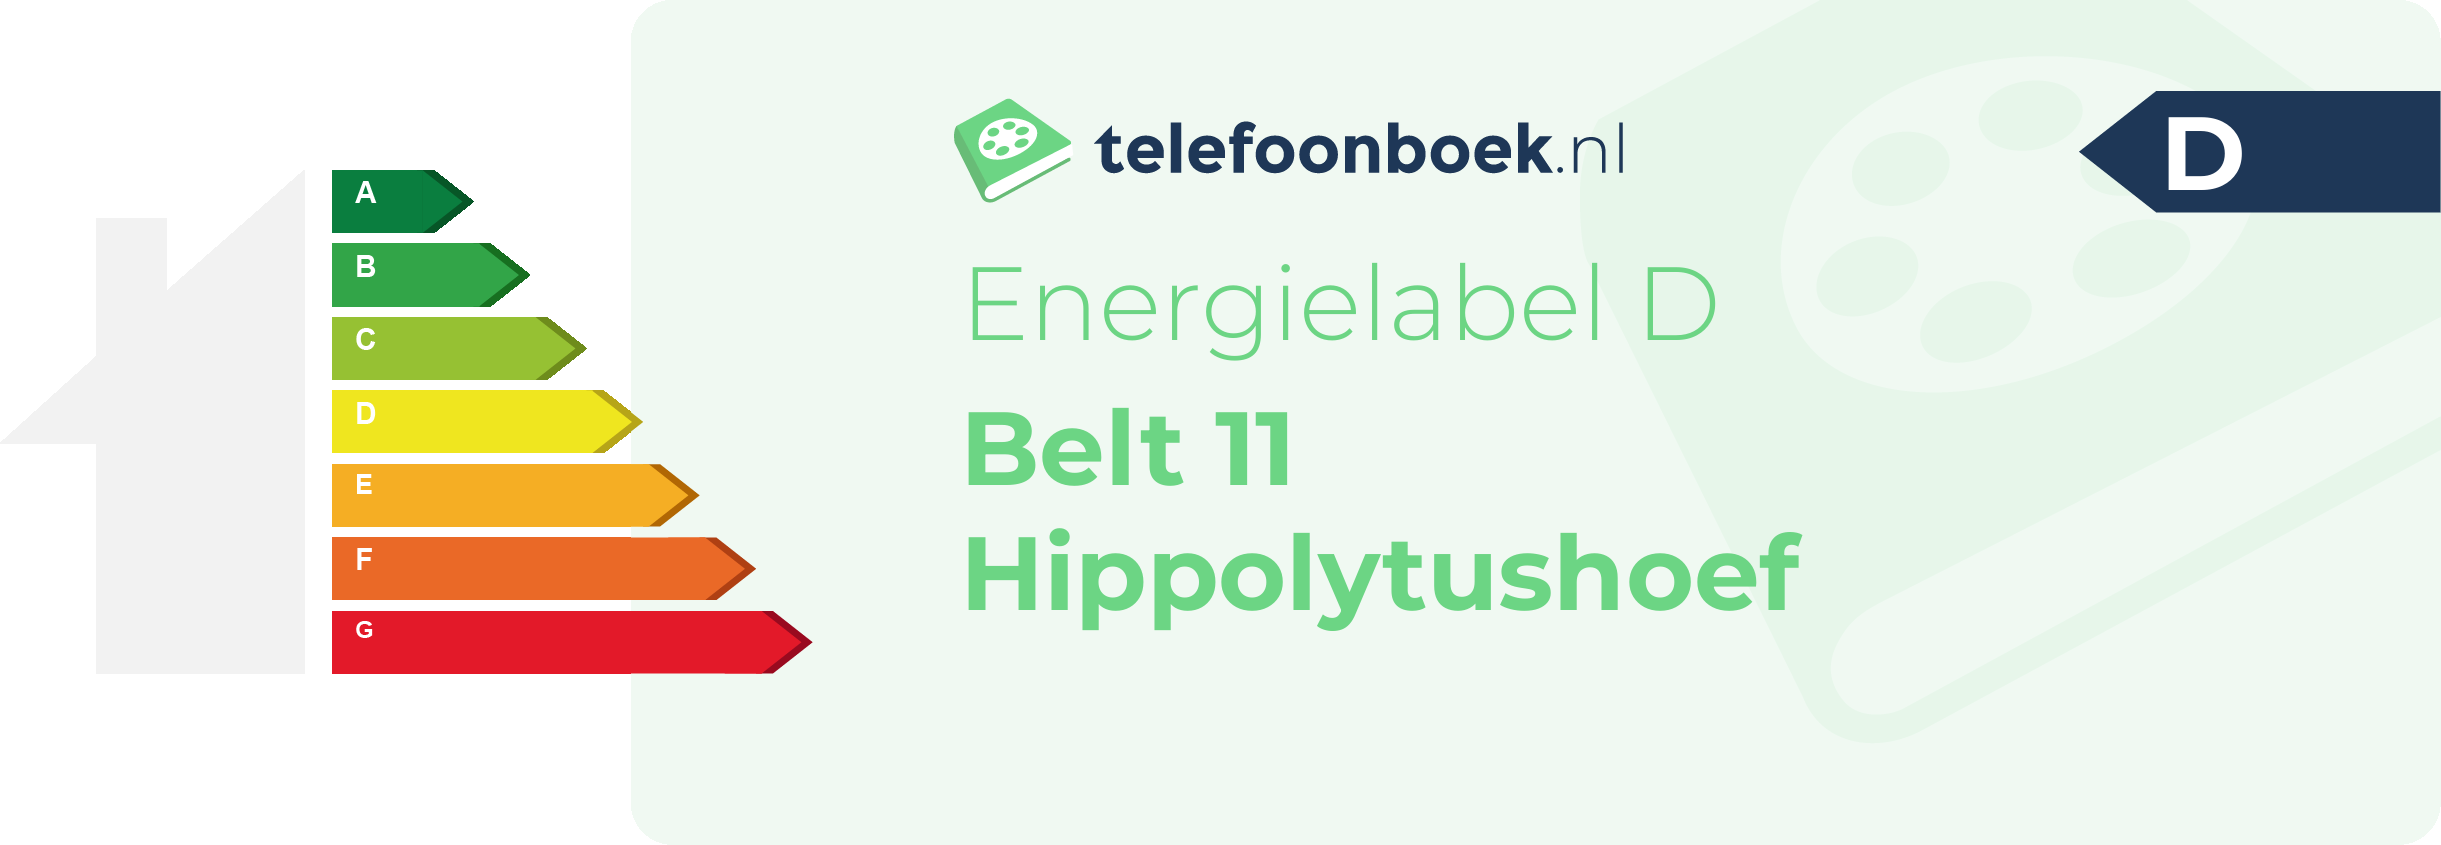 Energielabel Belt 11 Hippolytushoef